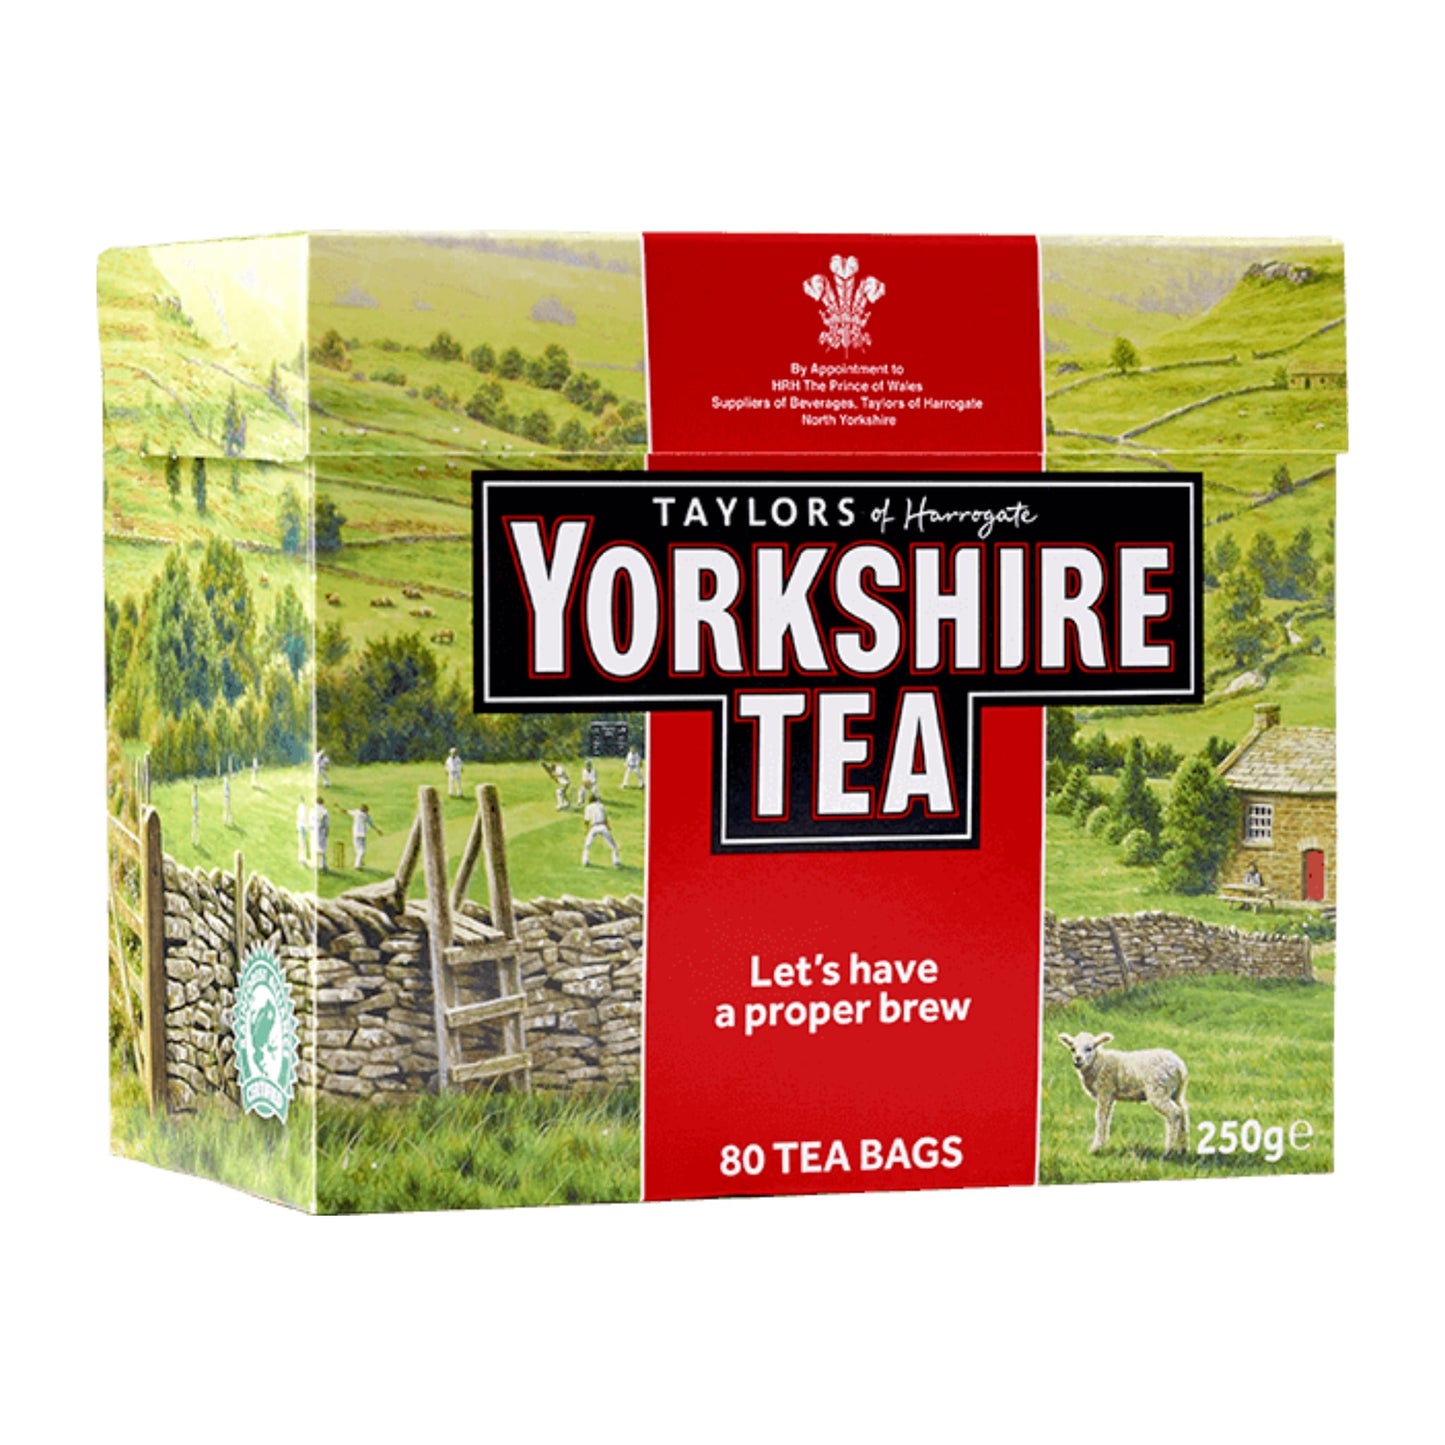 Yorkshire Tea 80 Tea Bags - The Great Yorkshire Shop